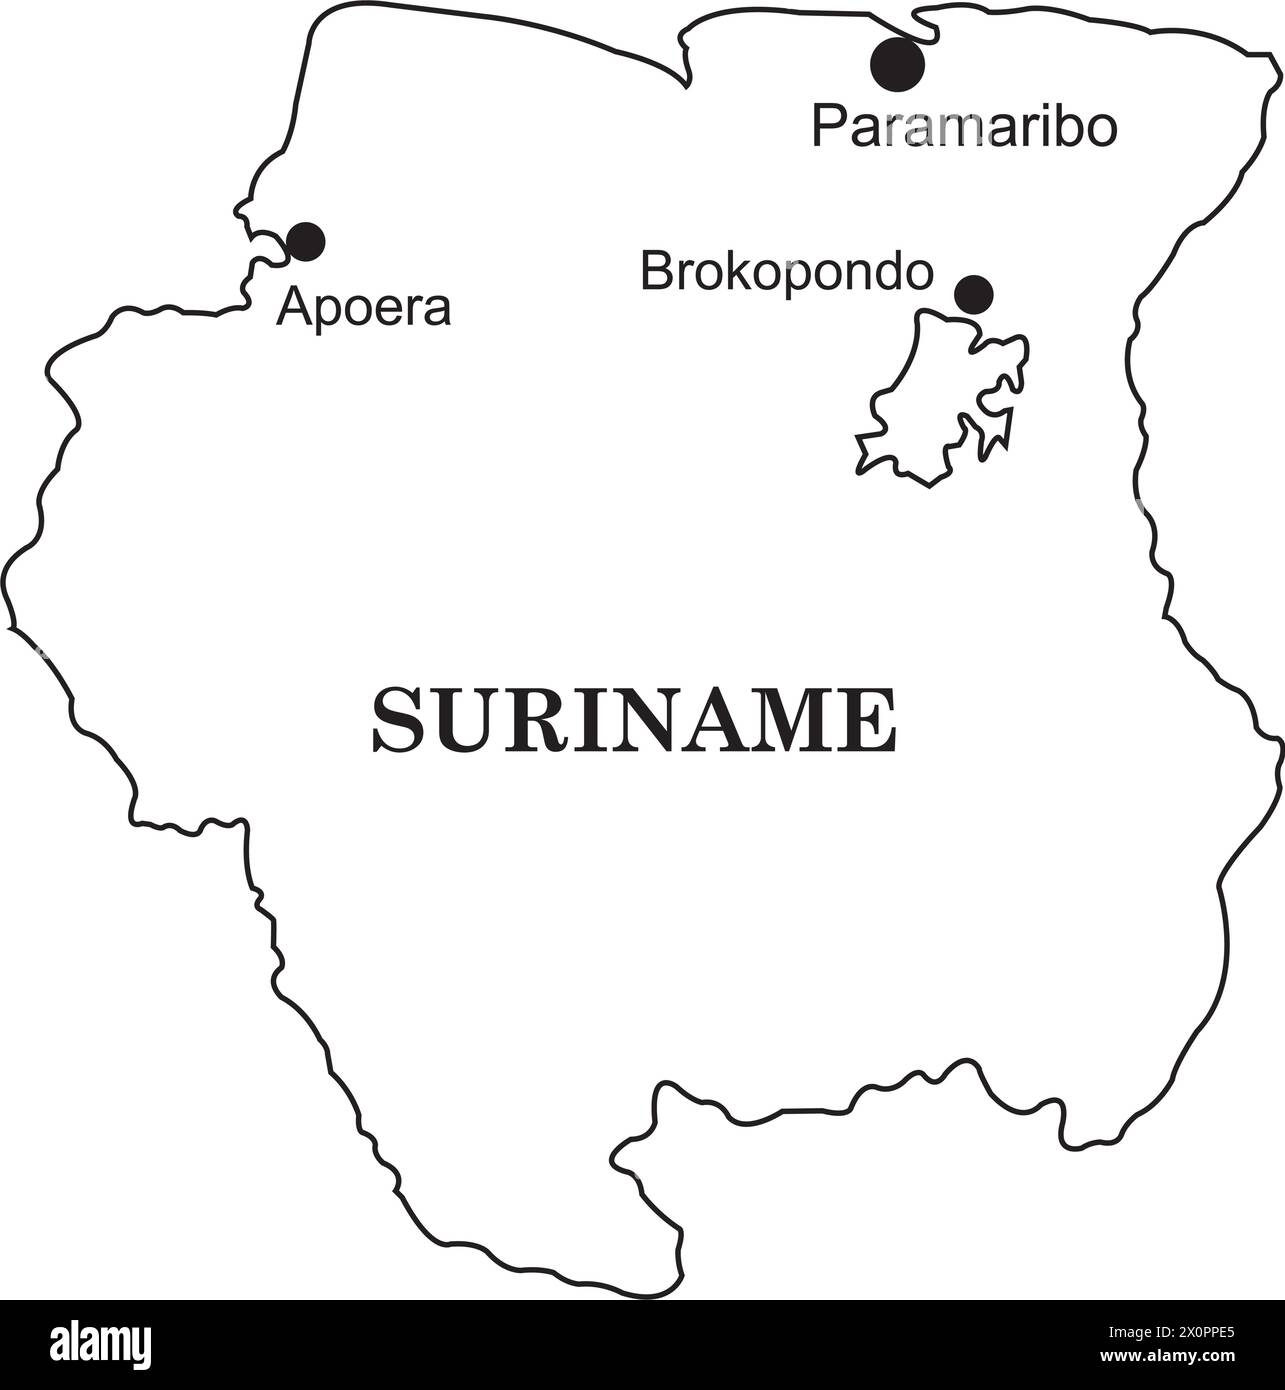 Suriname name map vector illustration simple design Stock Vector